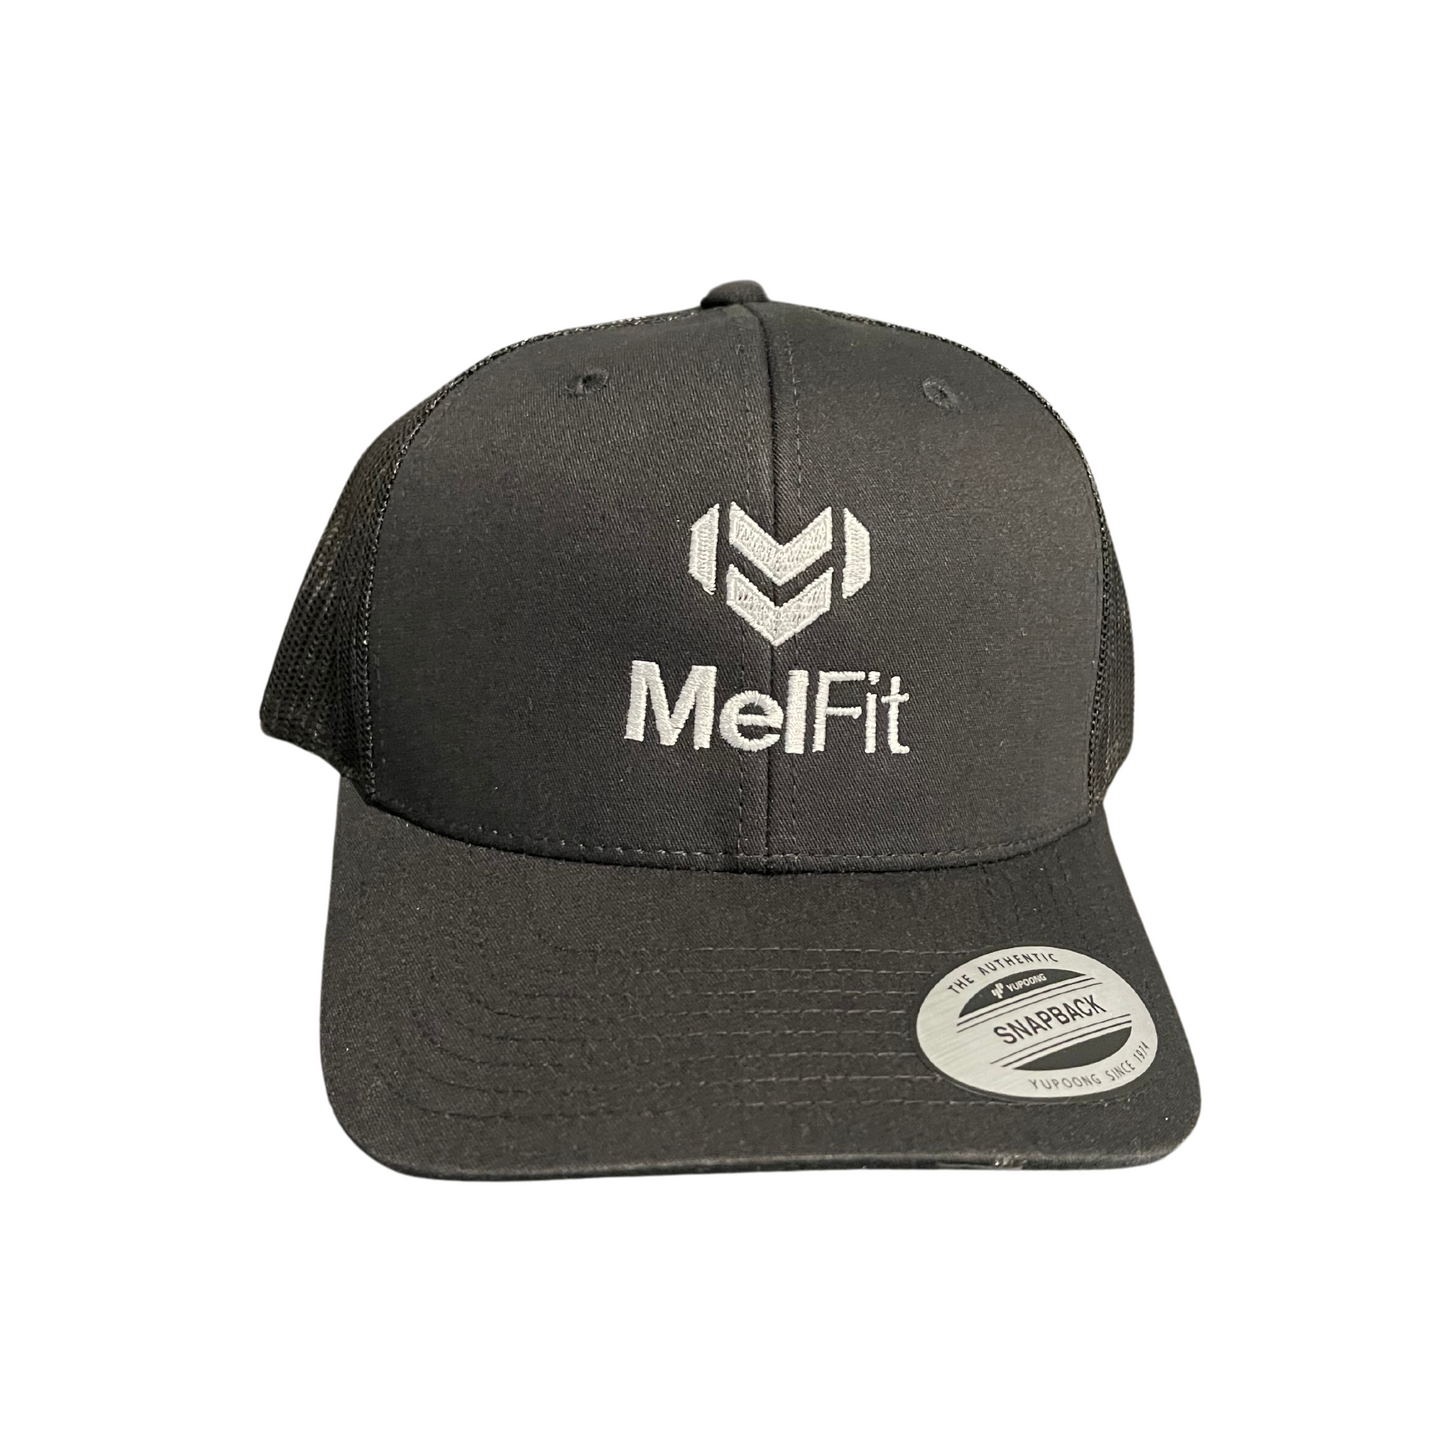 MelFit Trucker Hat